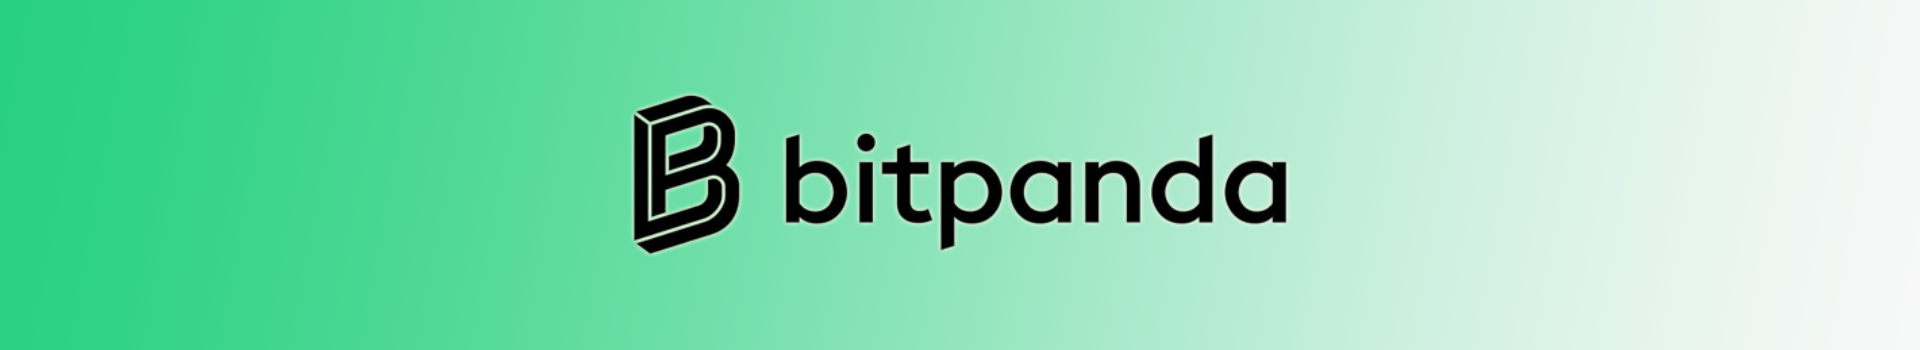 Bitpanda Review